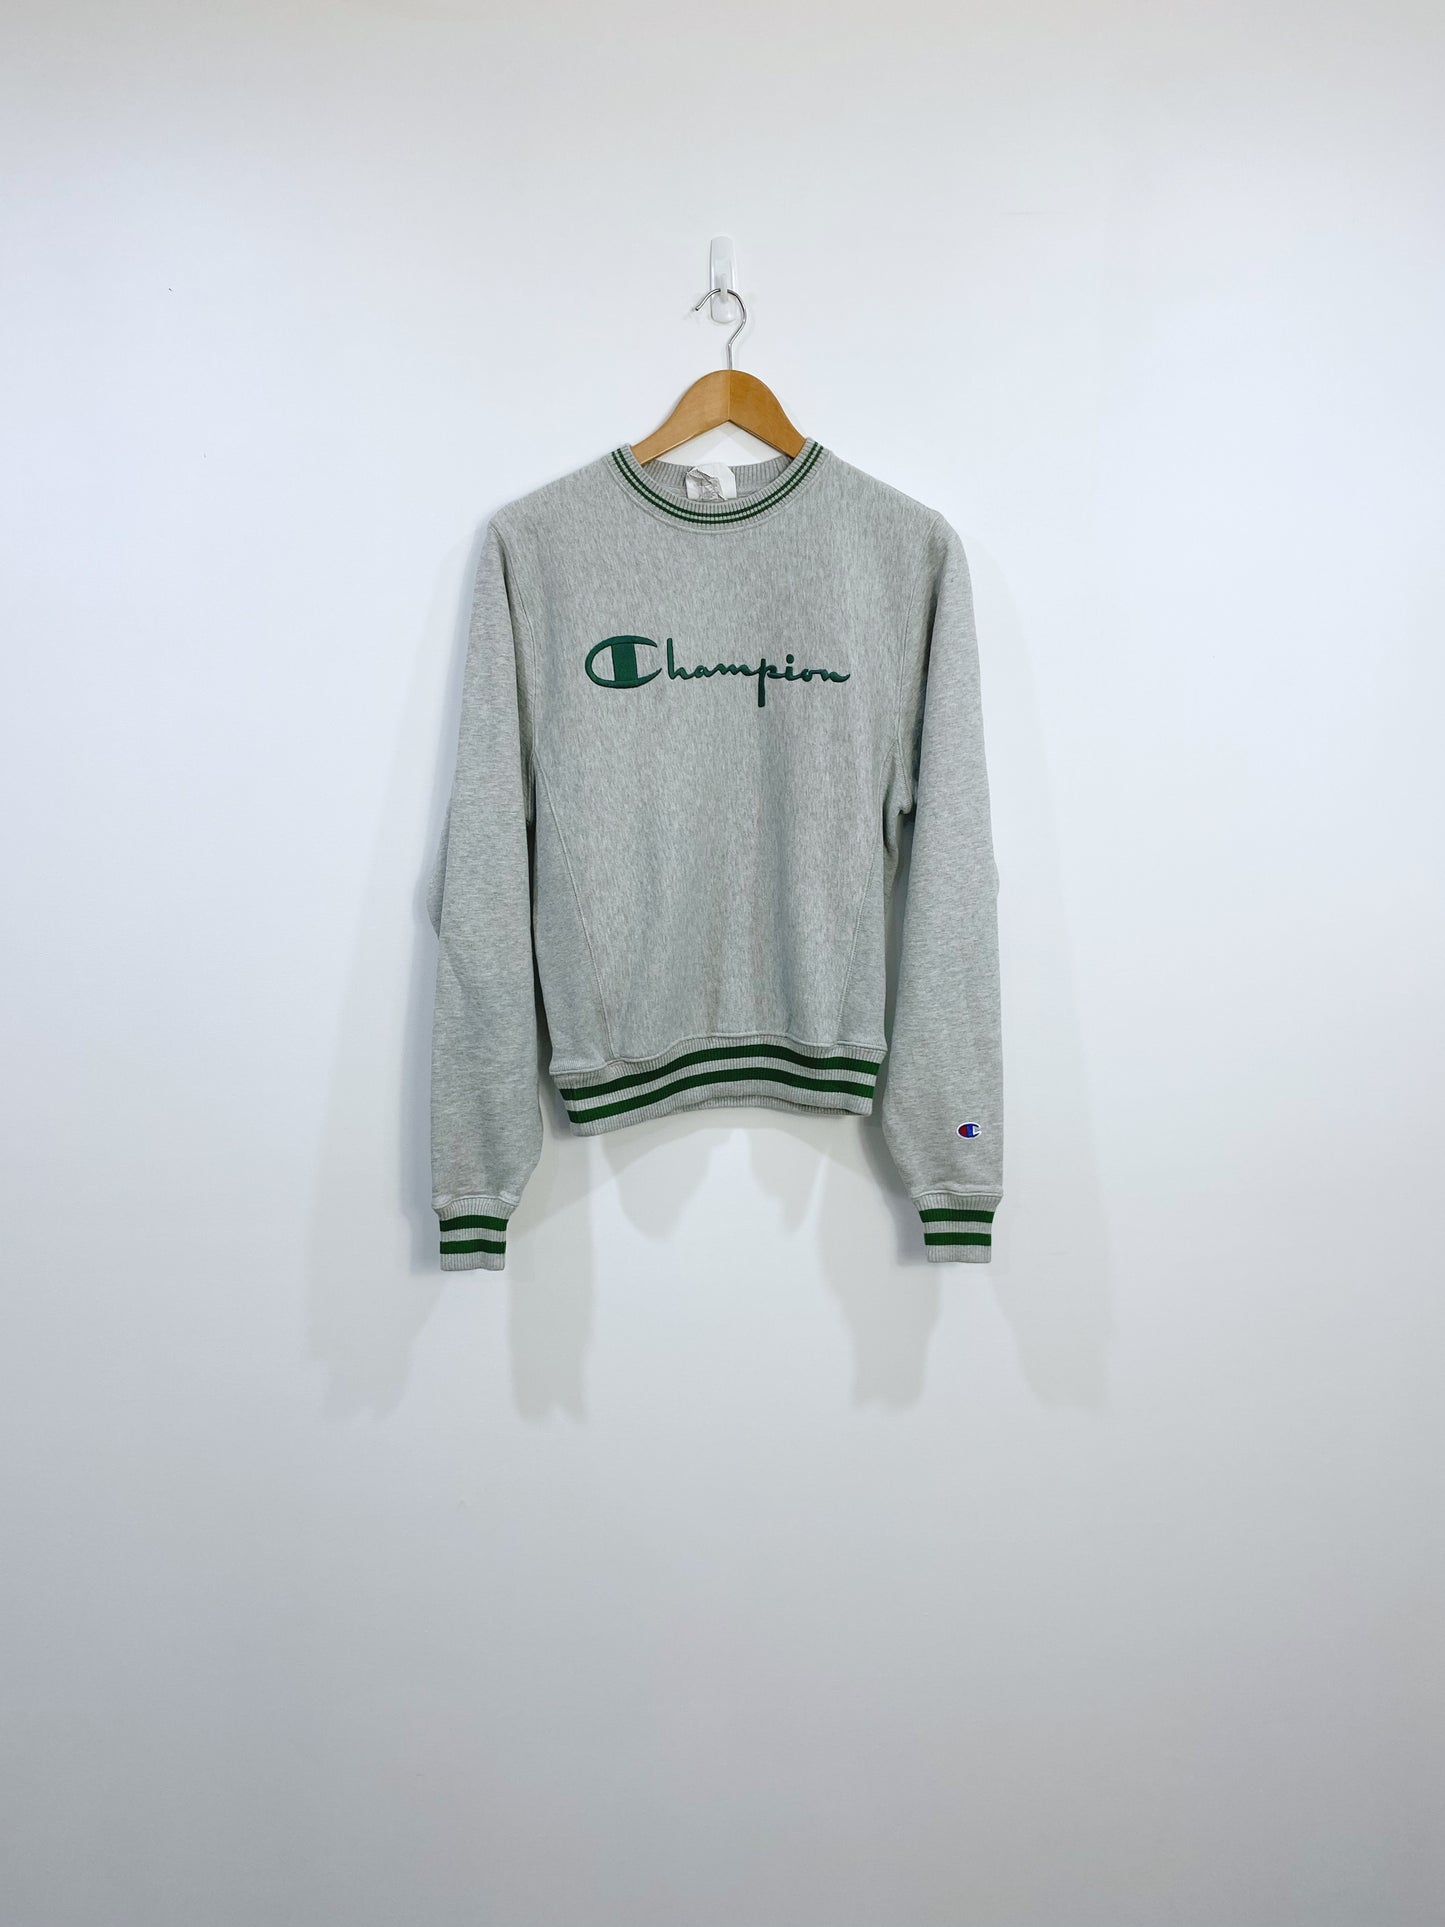 Vintage 90s Champion Embroidered Sweatshirt M